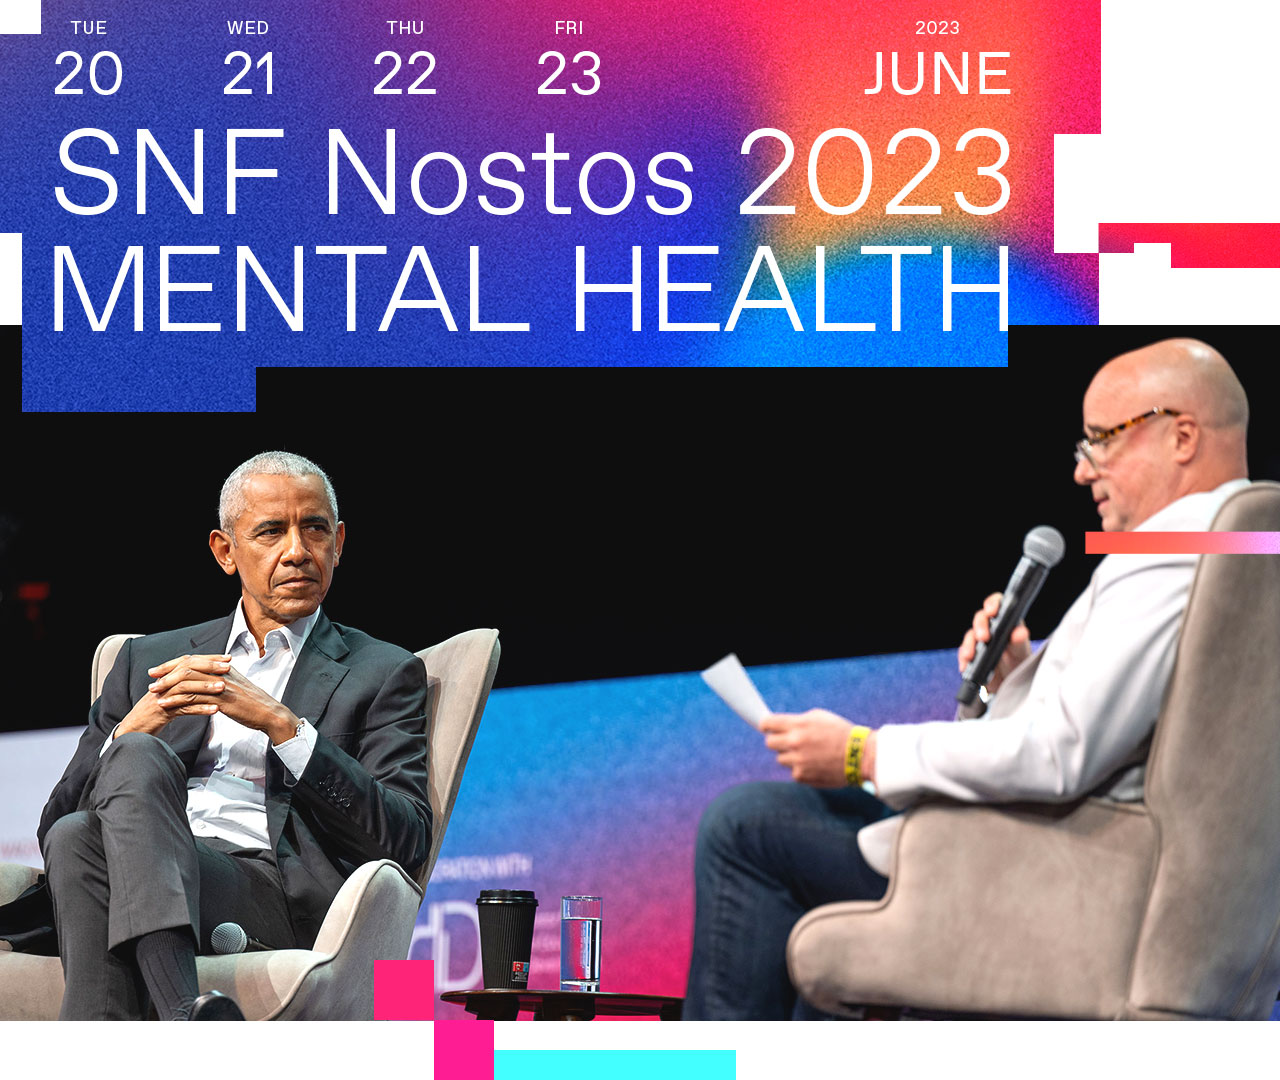 SNF Nostos 2023 Conference